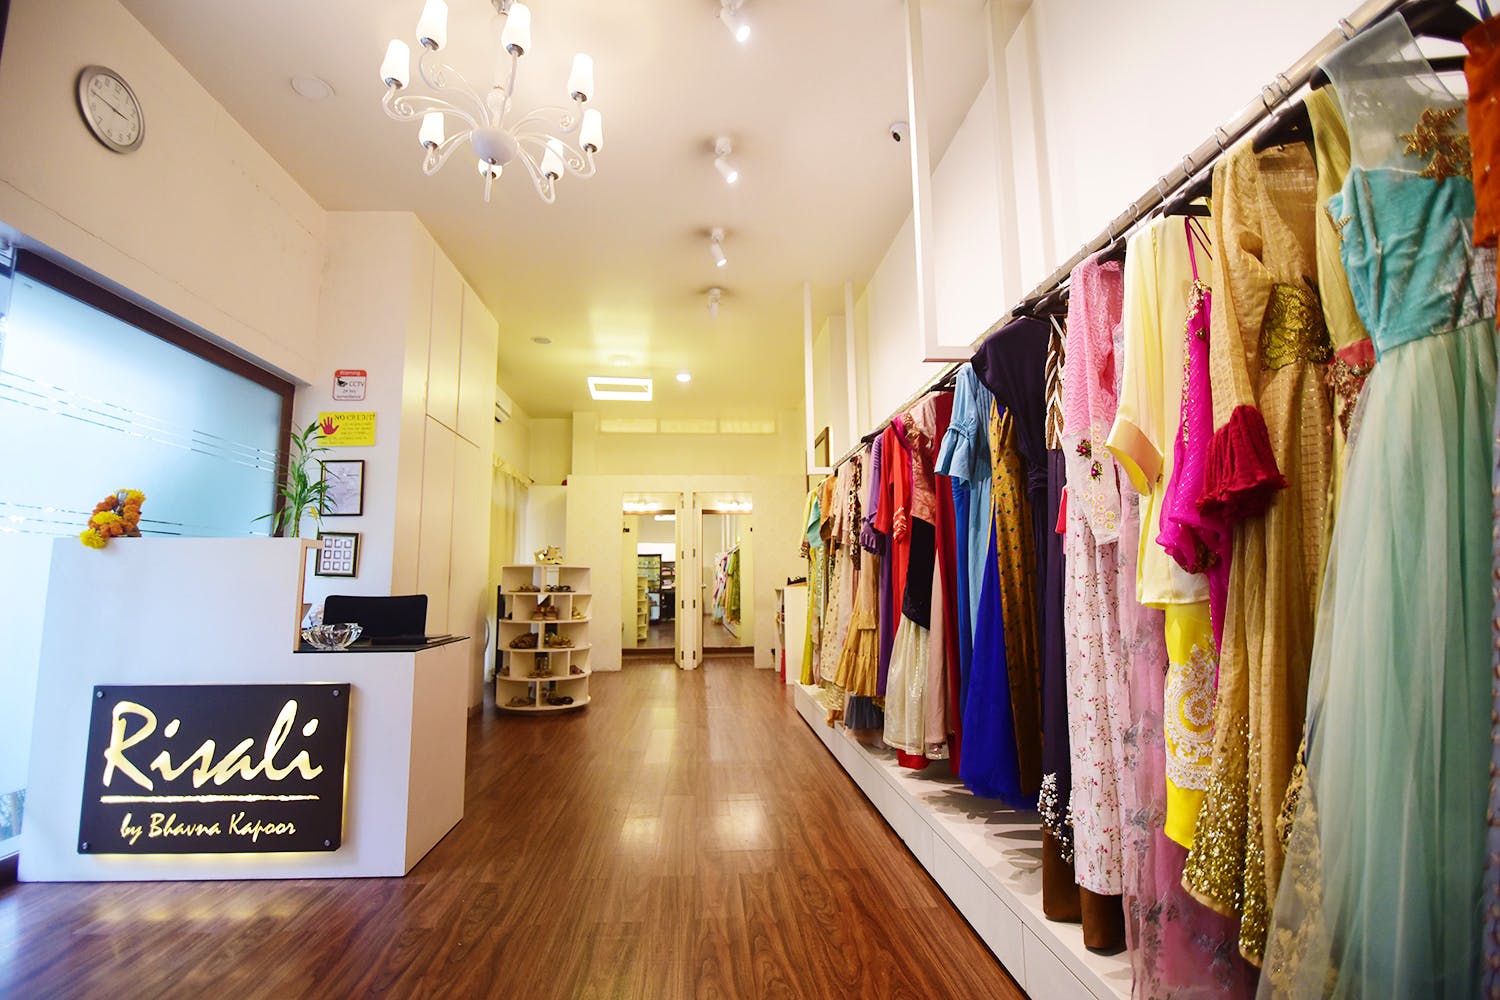 Boutique,Building,Ceiling,Interior design,Fashion,Room,Outlet store,Dress,Floor,Flooring